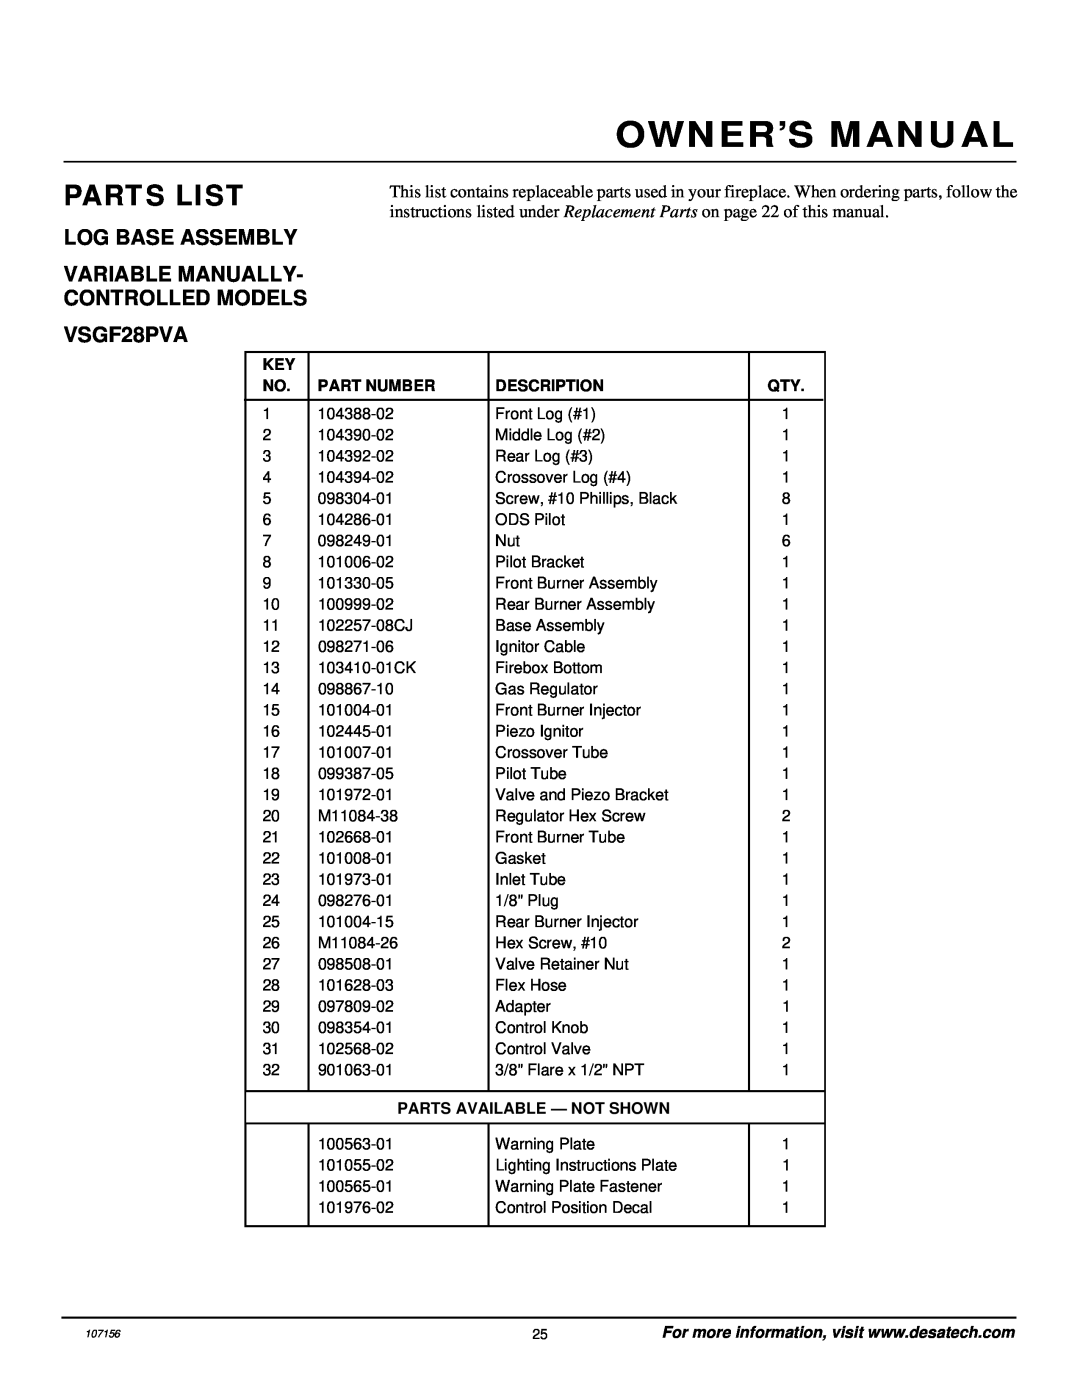 Vanguard Heating VSGF28PTC Parts List, VARIABLE MANUALLY- CONTROLLED MODELS VSGF28PVA, Log Base Assembly, Part Number 